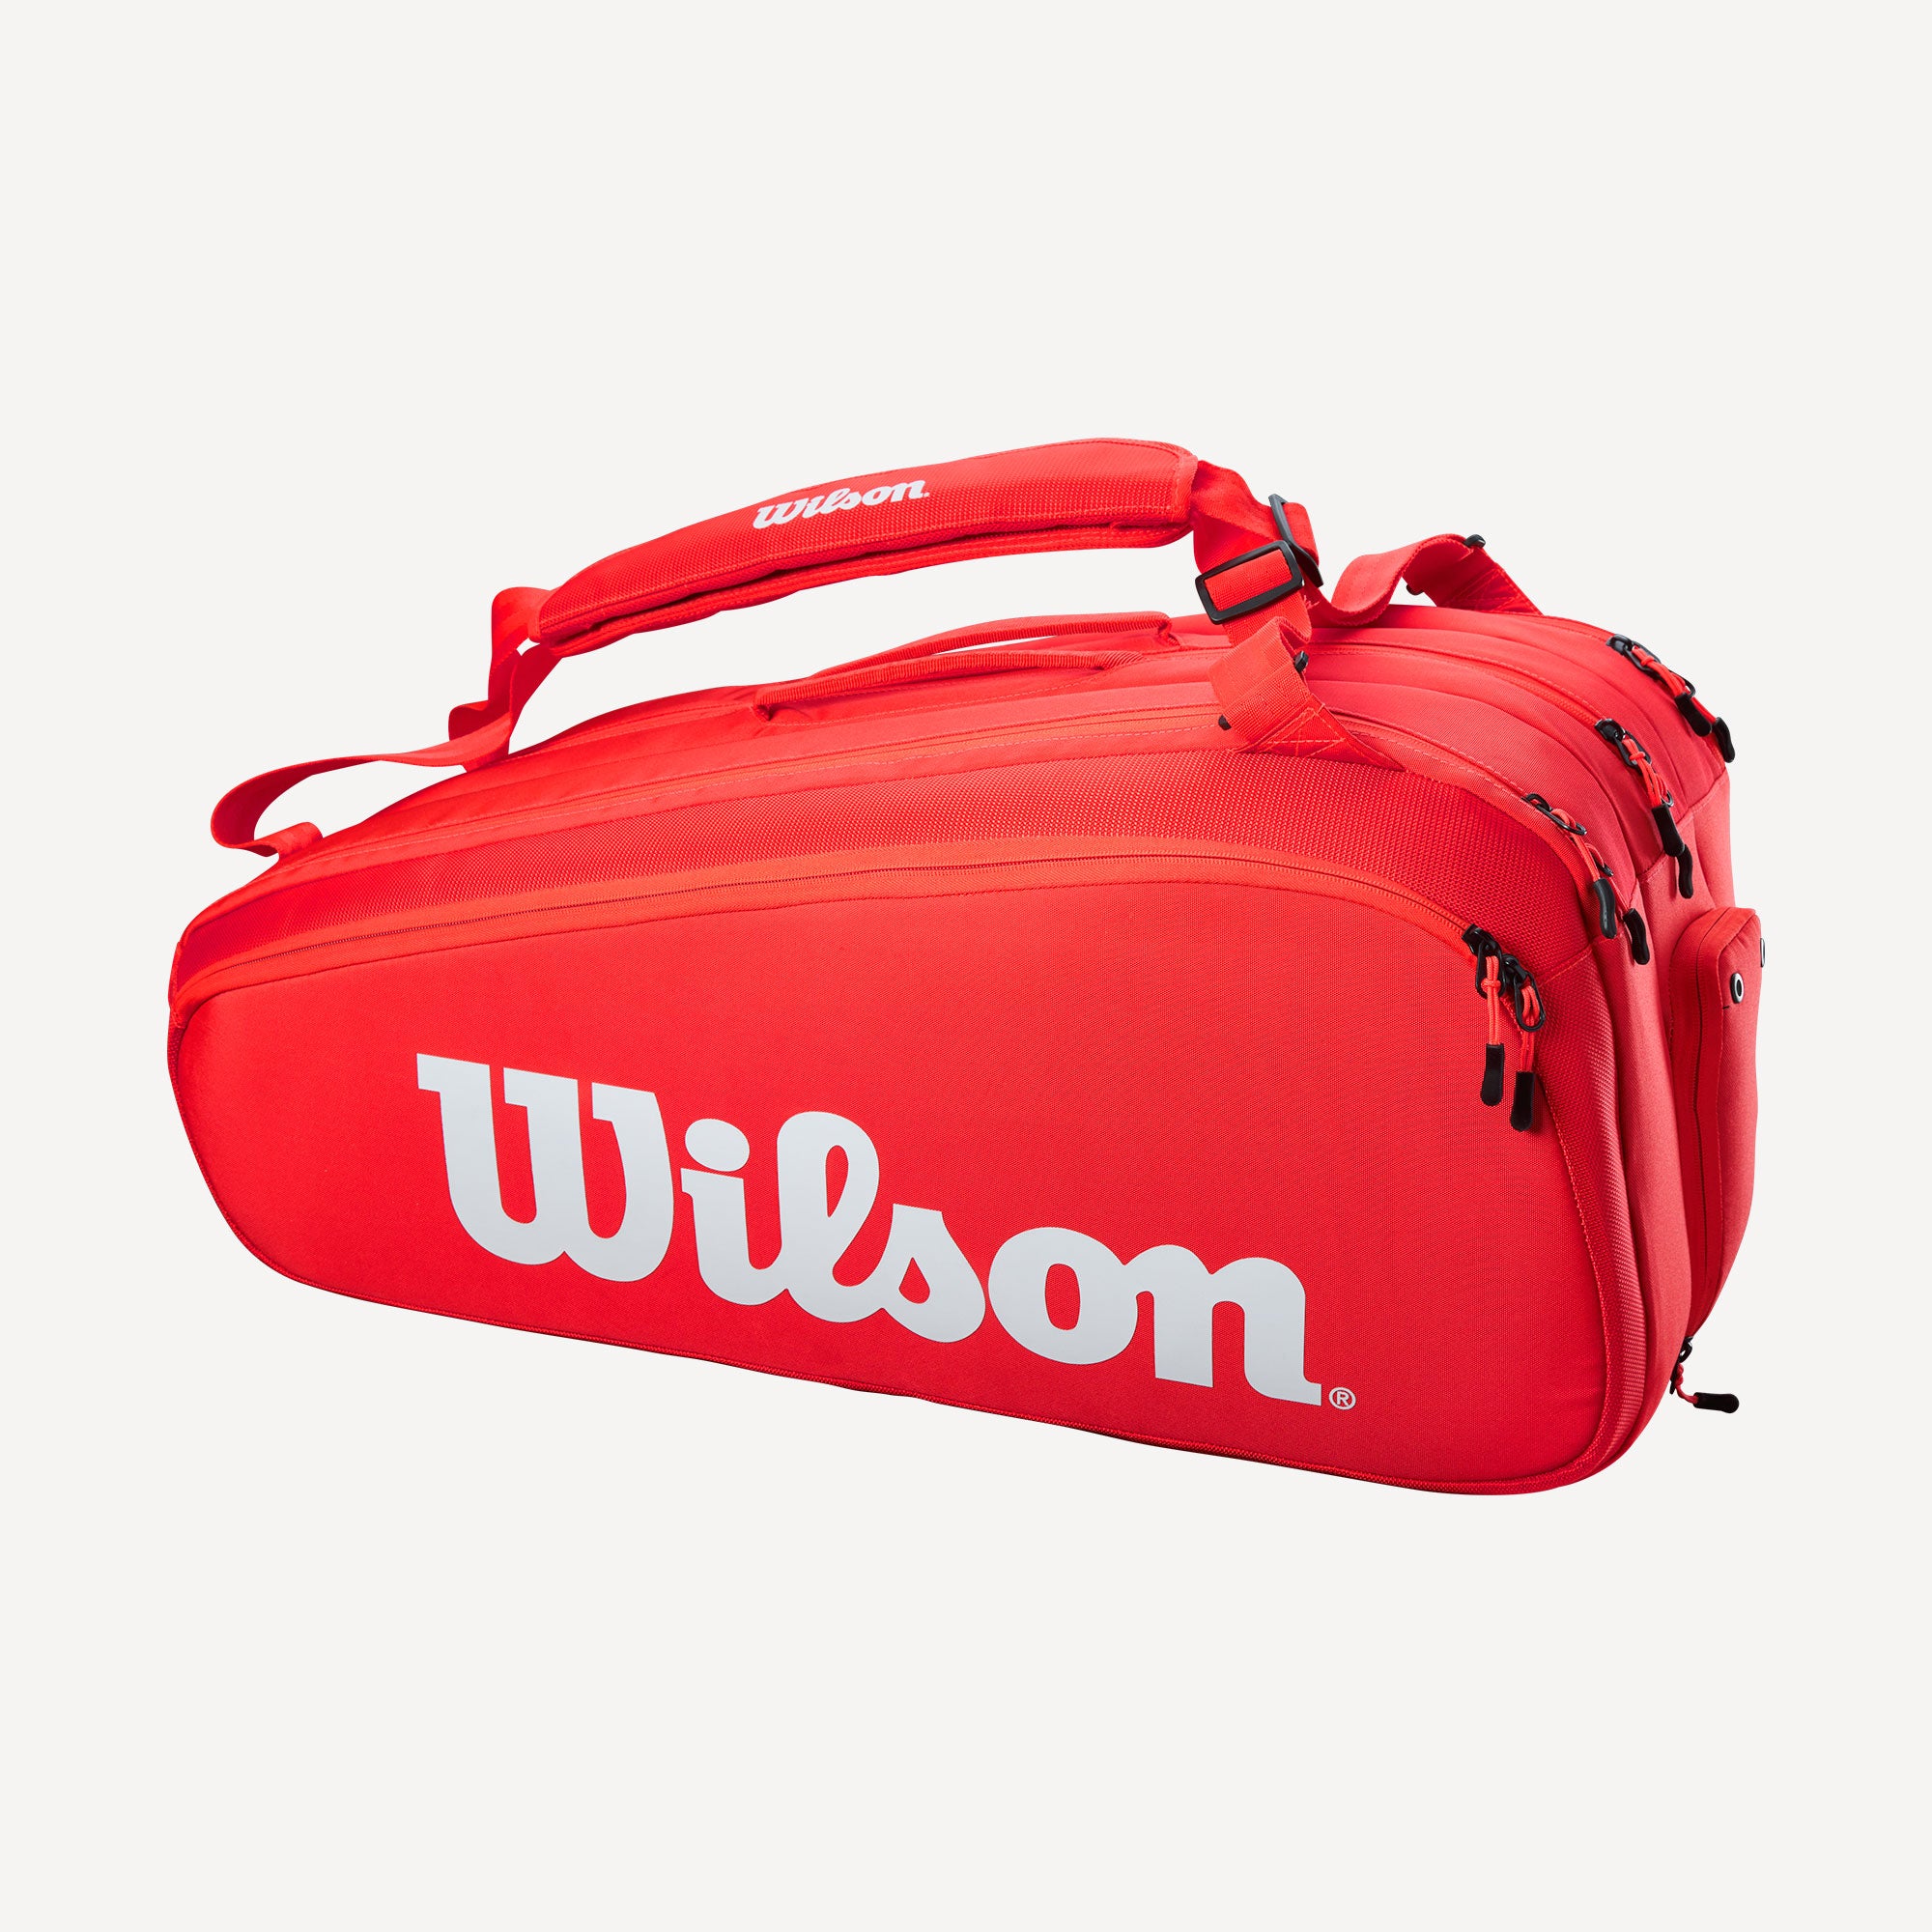 Wilson Super Tour 15 Pack Tennis Bag Red (1)